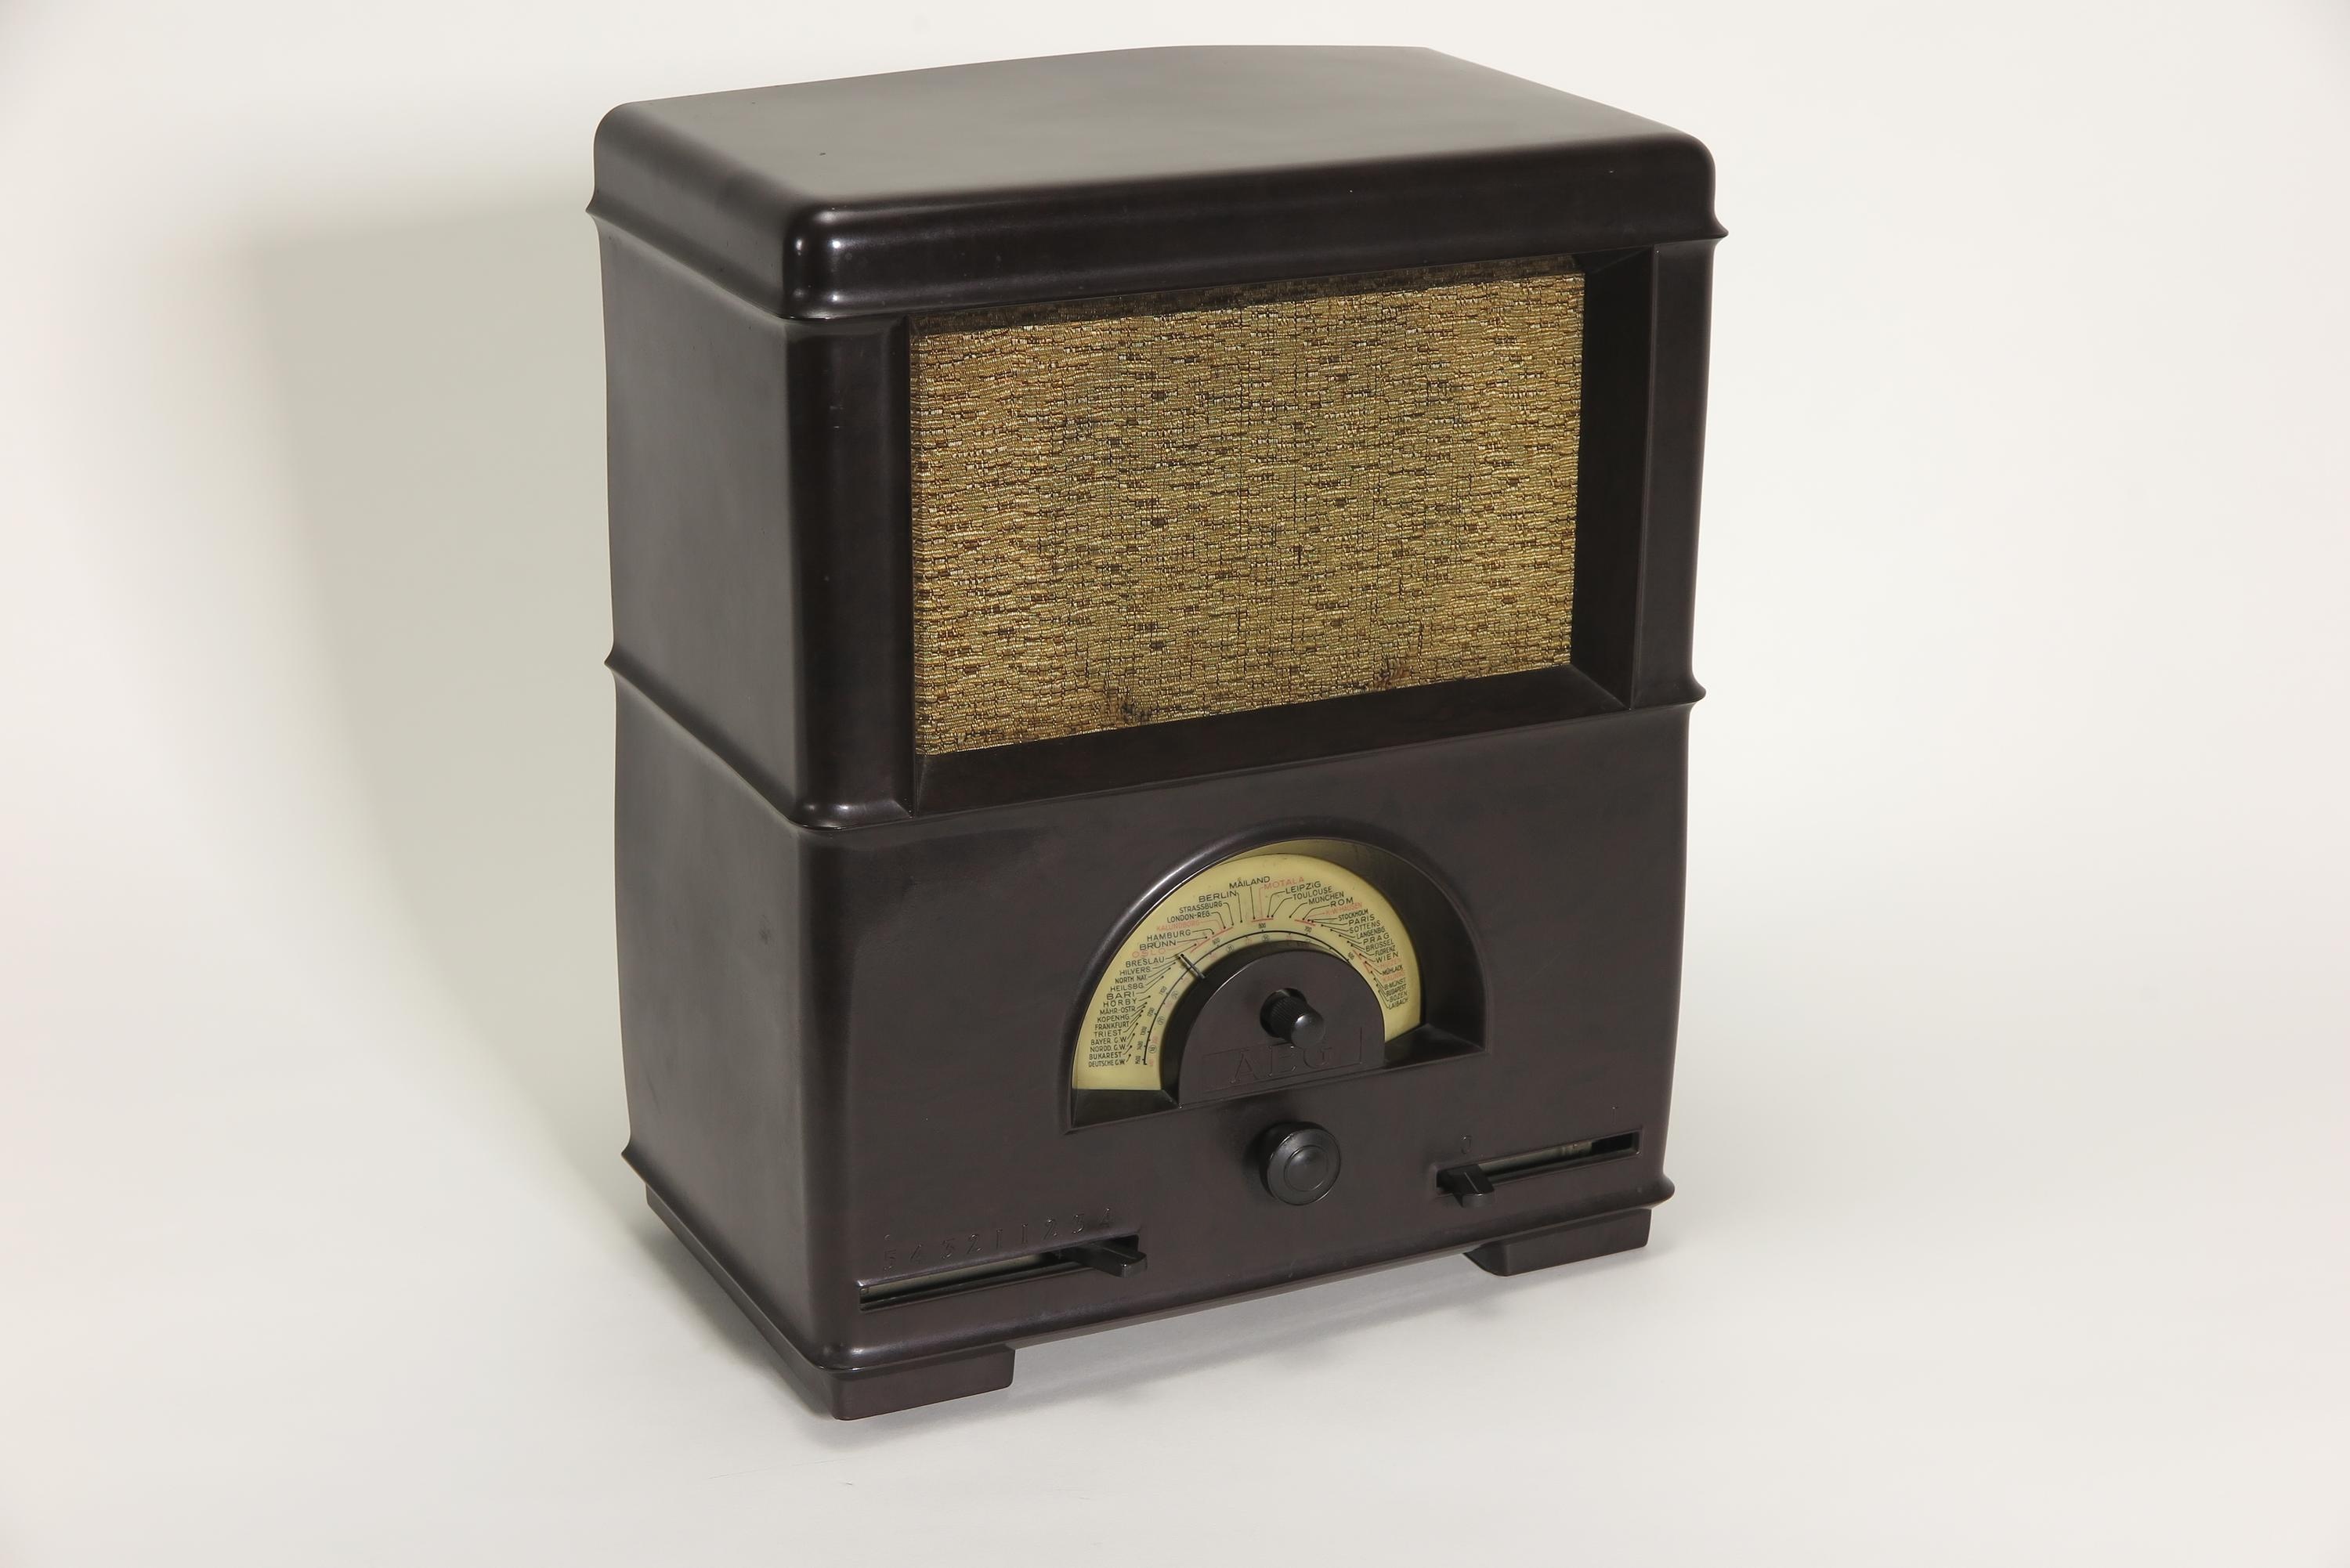 Radio AEG "Geadux" 112 WLK (Deutsches Technikmuseum CC BY)